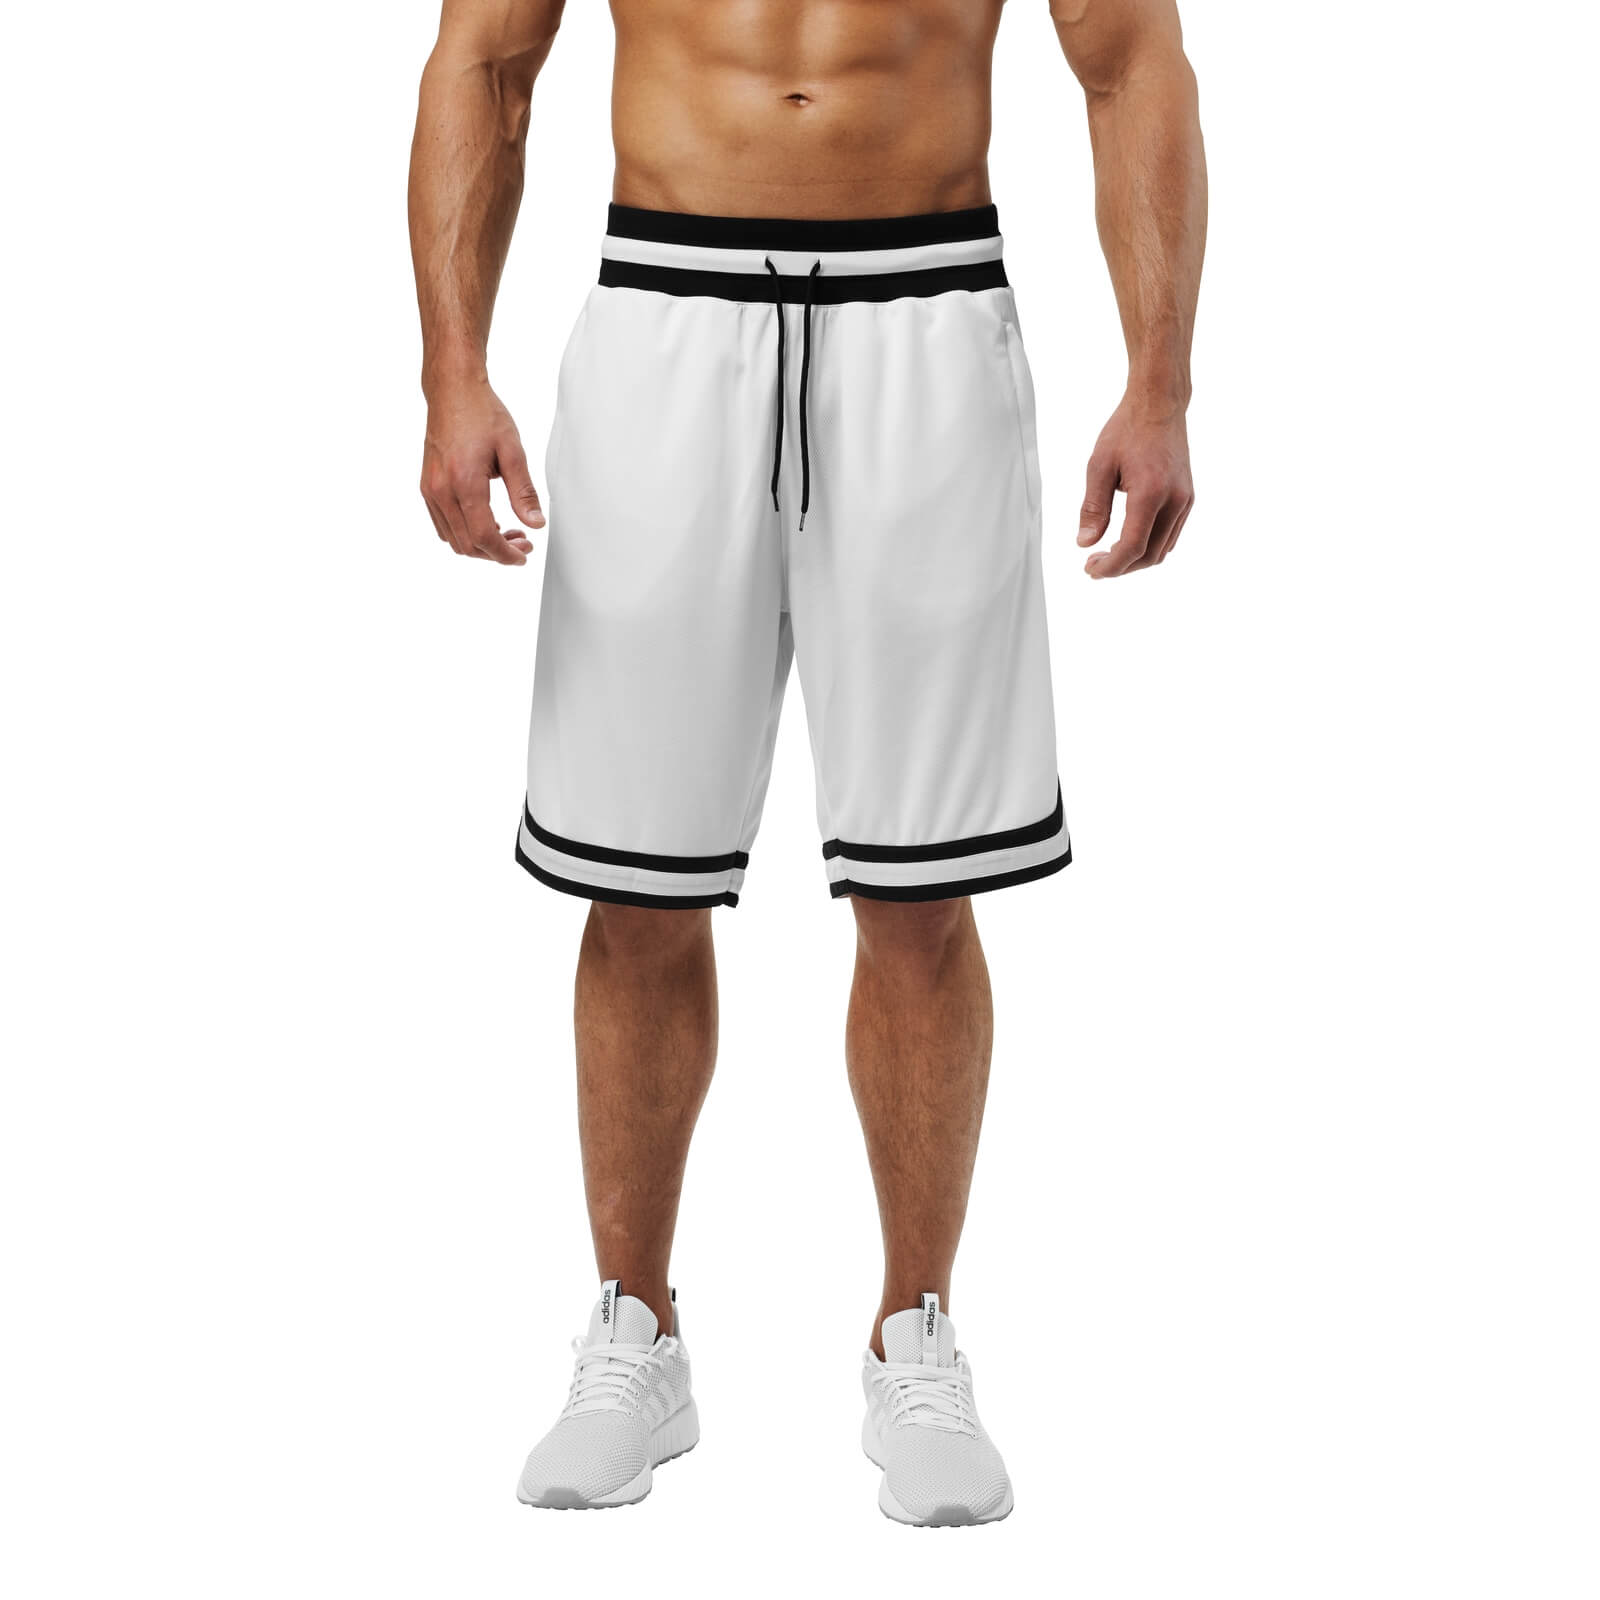 Harlem Shorts, white, Better Bodies